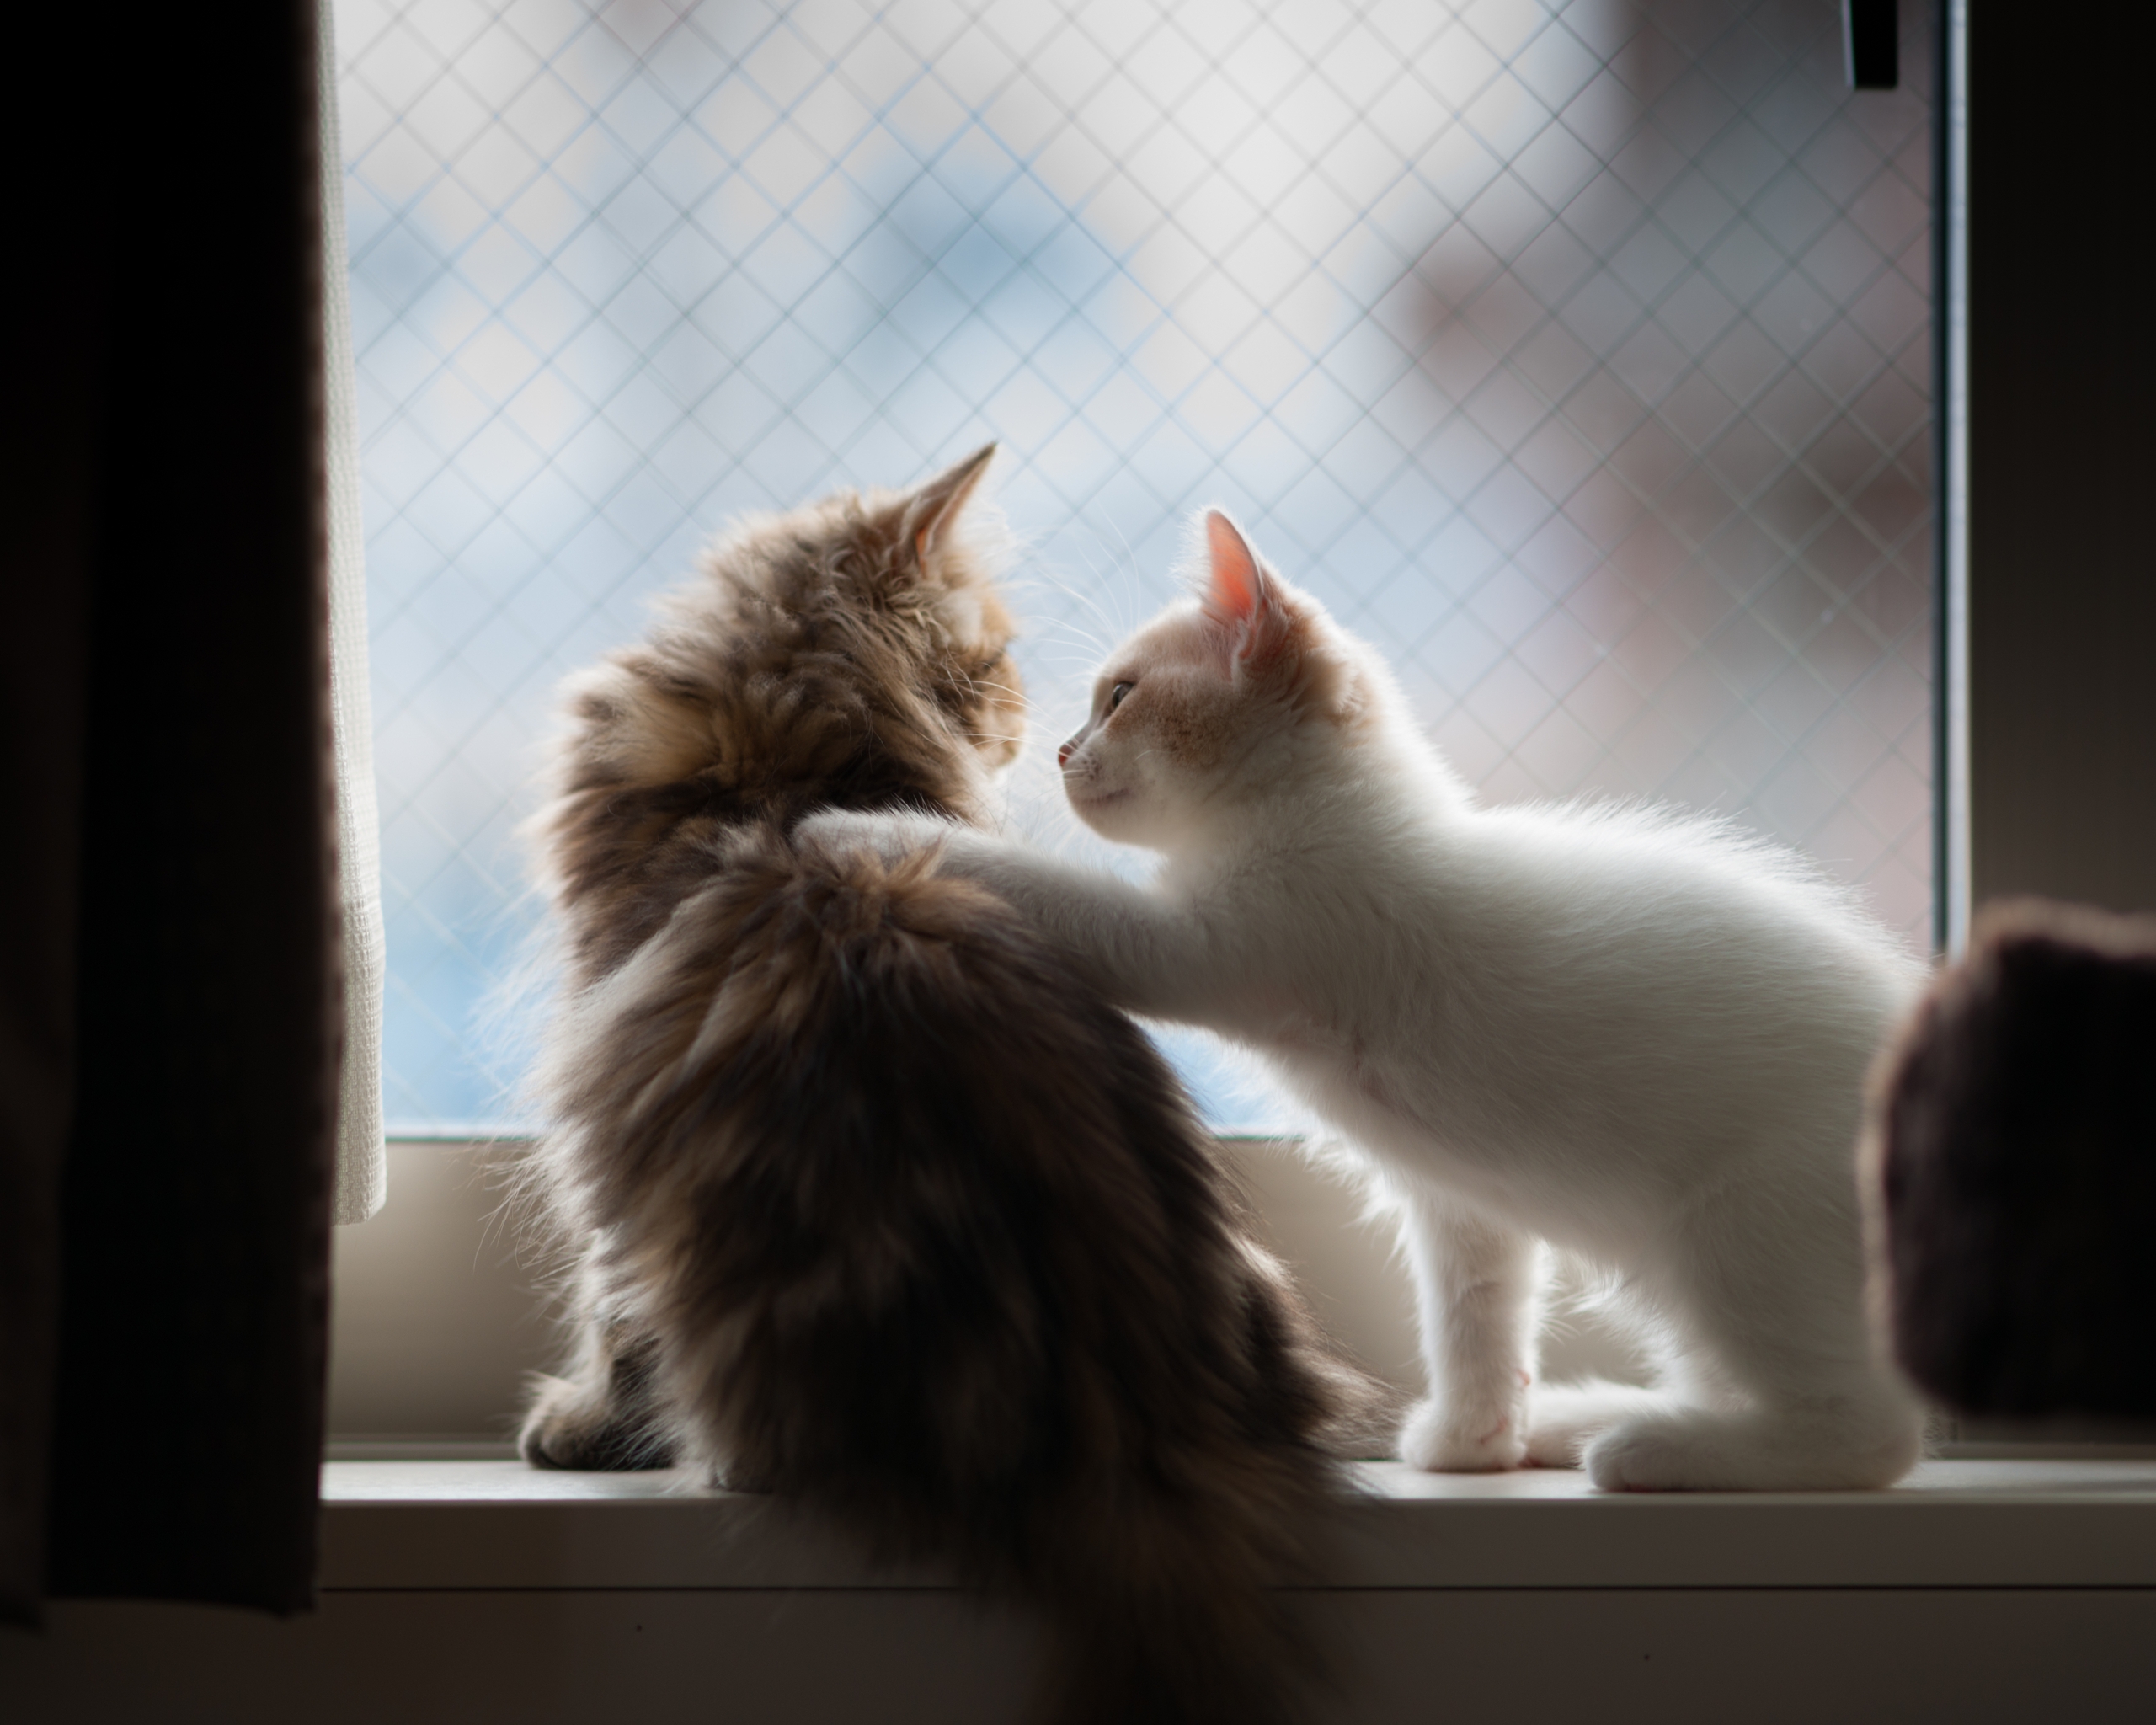 Image: Cat, fur, furry, communication, window, windowsill